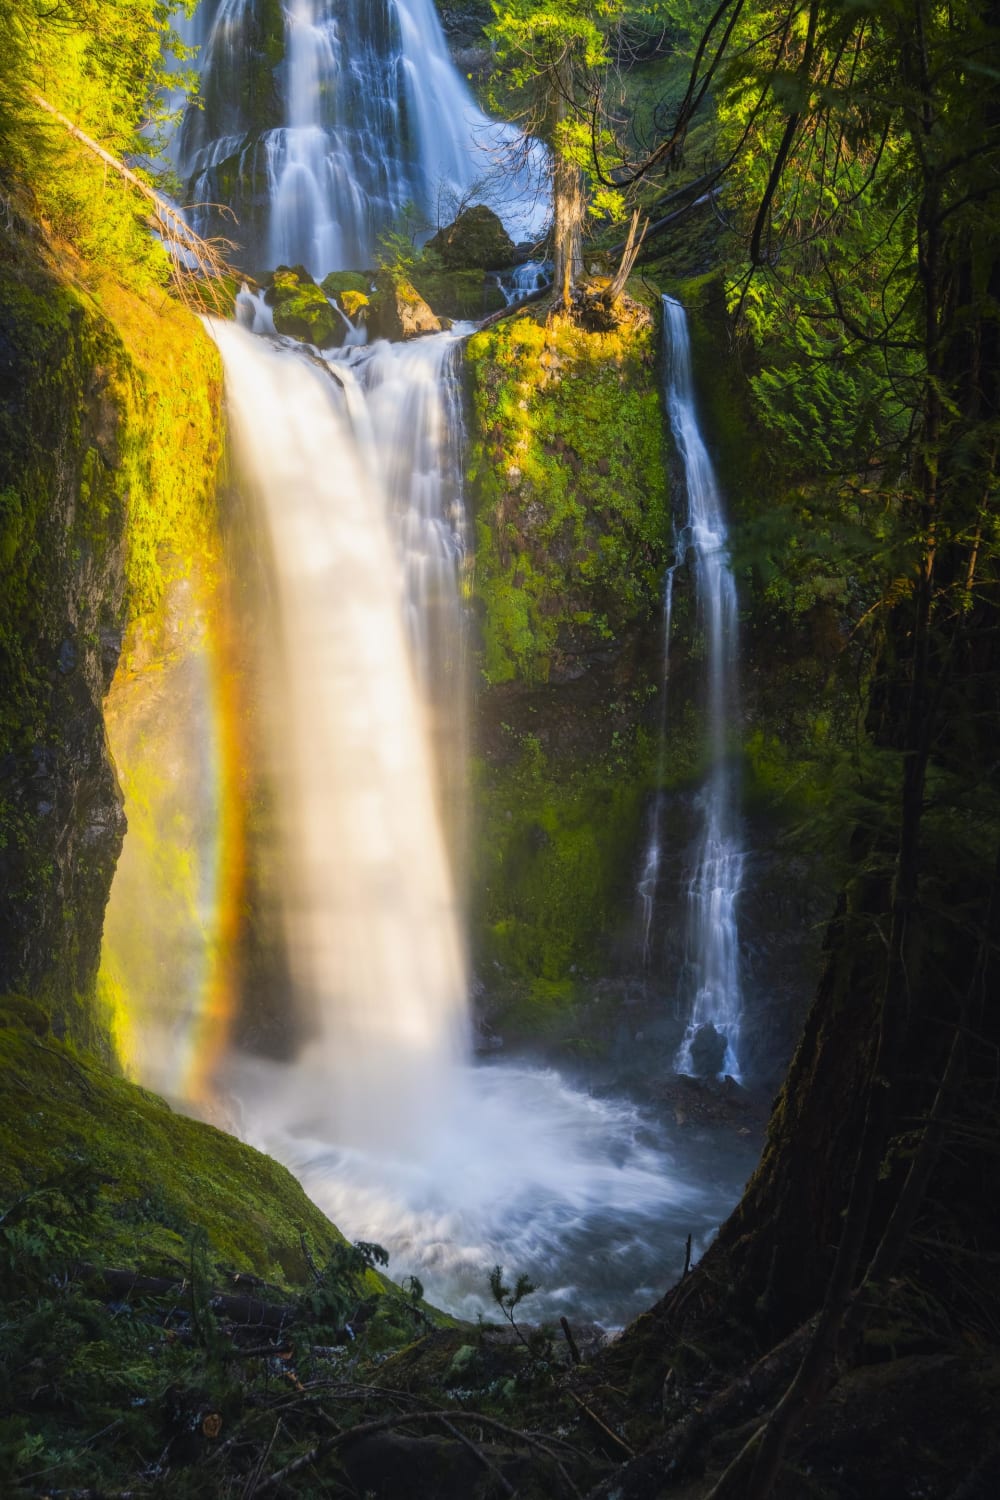 Long exposures of waterfalls never get old